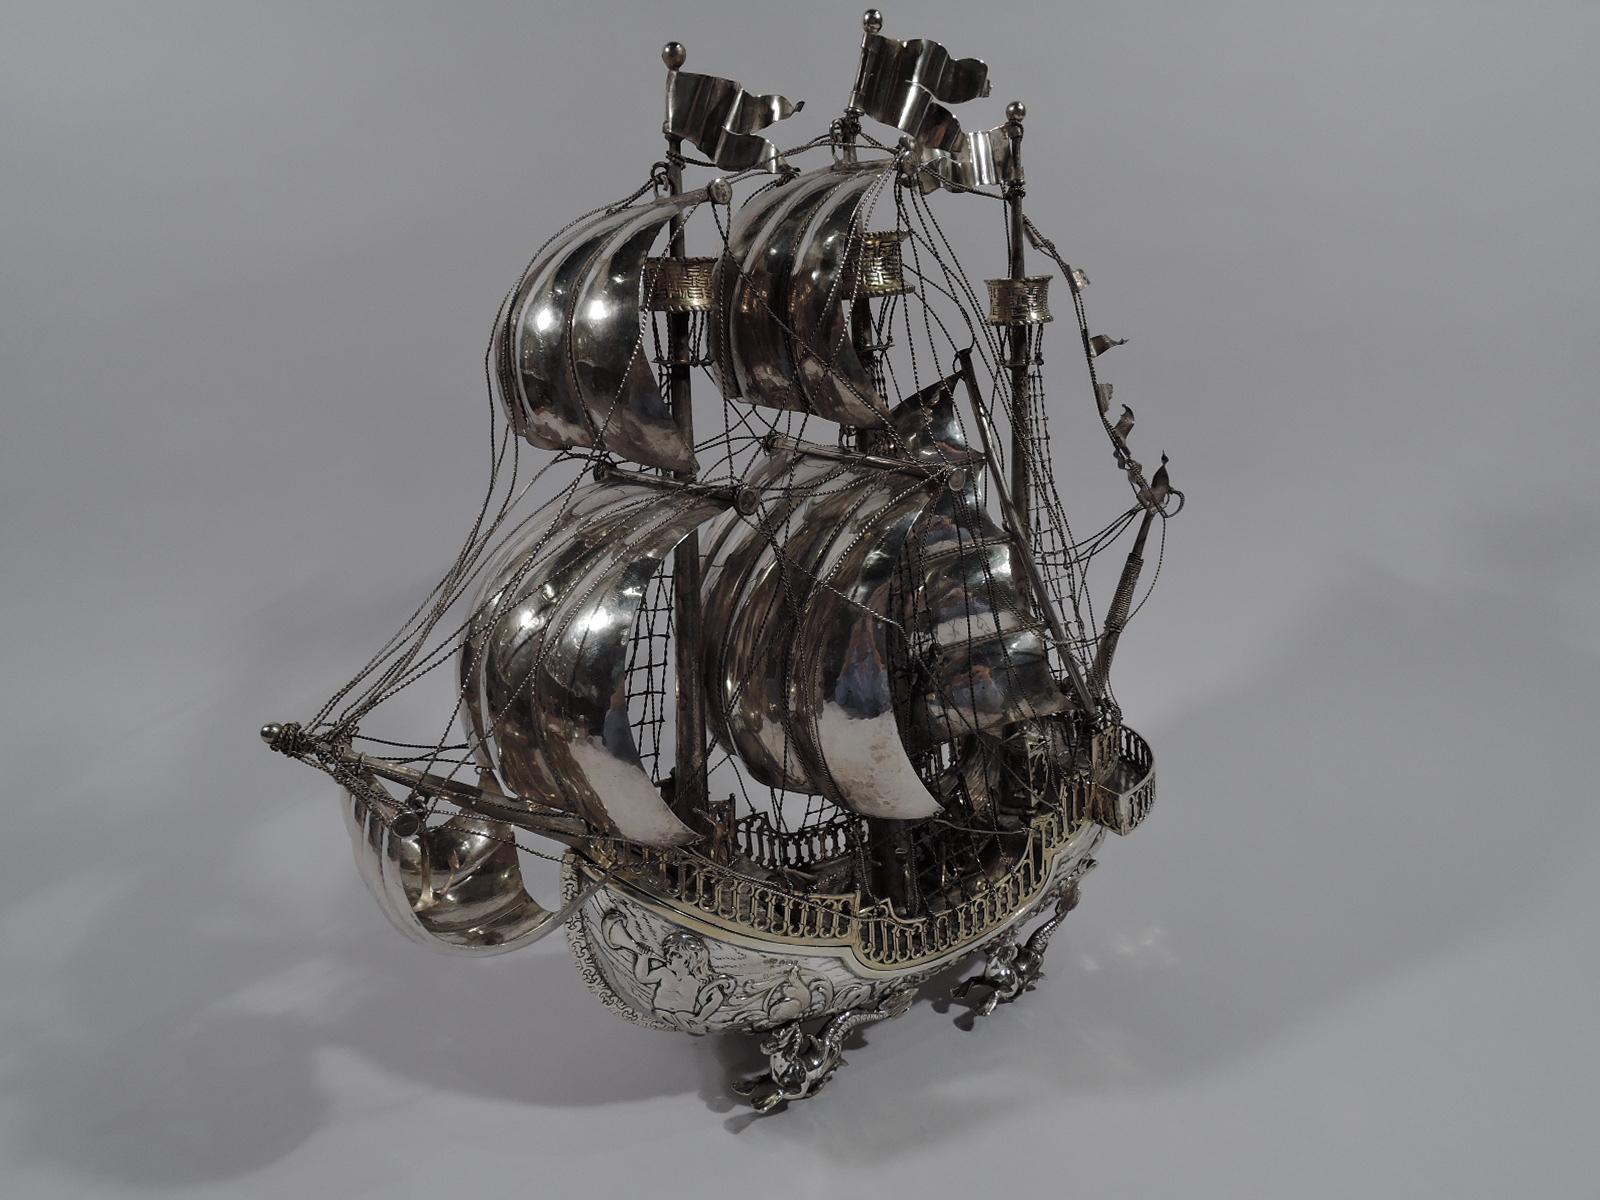 Georgian Ship Ahoy, Antique Sterling Silver 3-Mast Galleon Nef